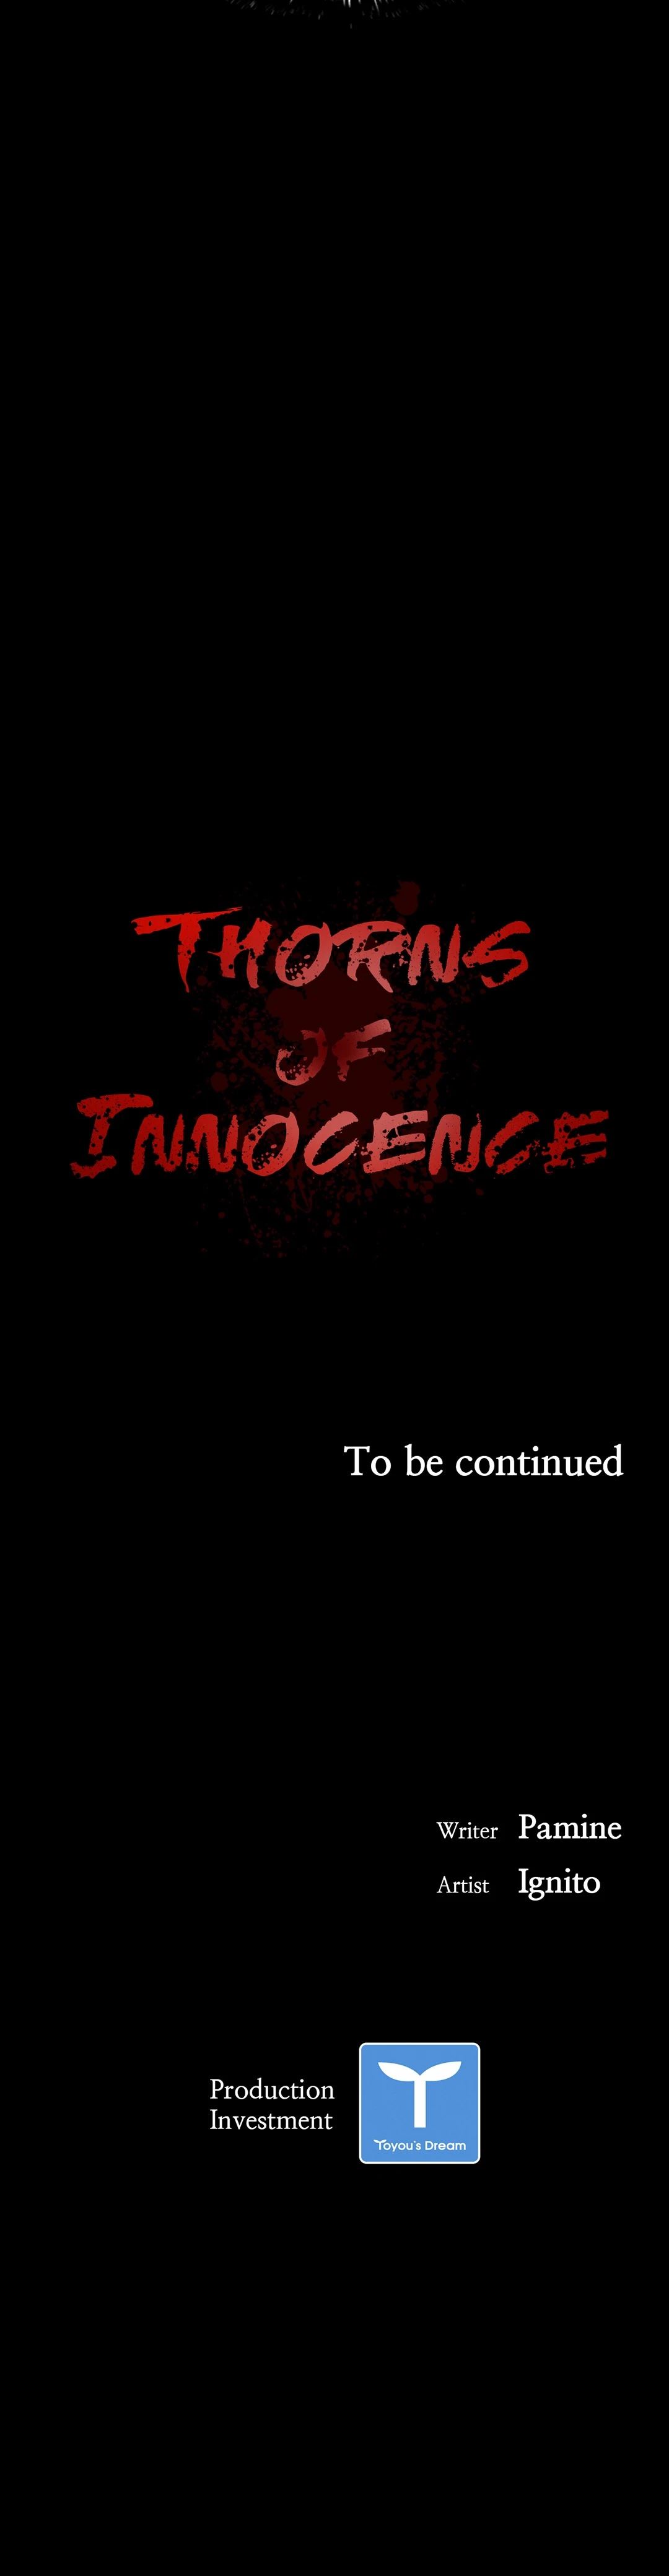 Thorns on Innocence image